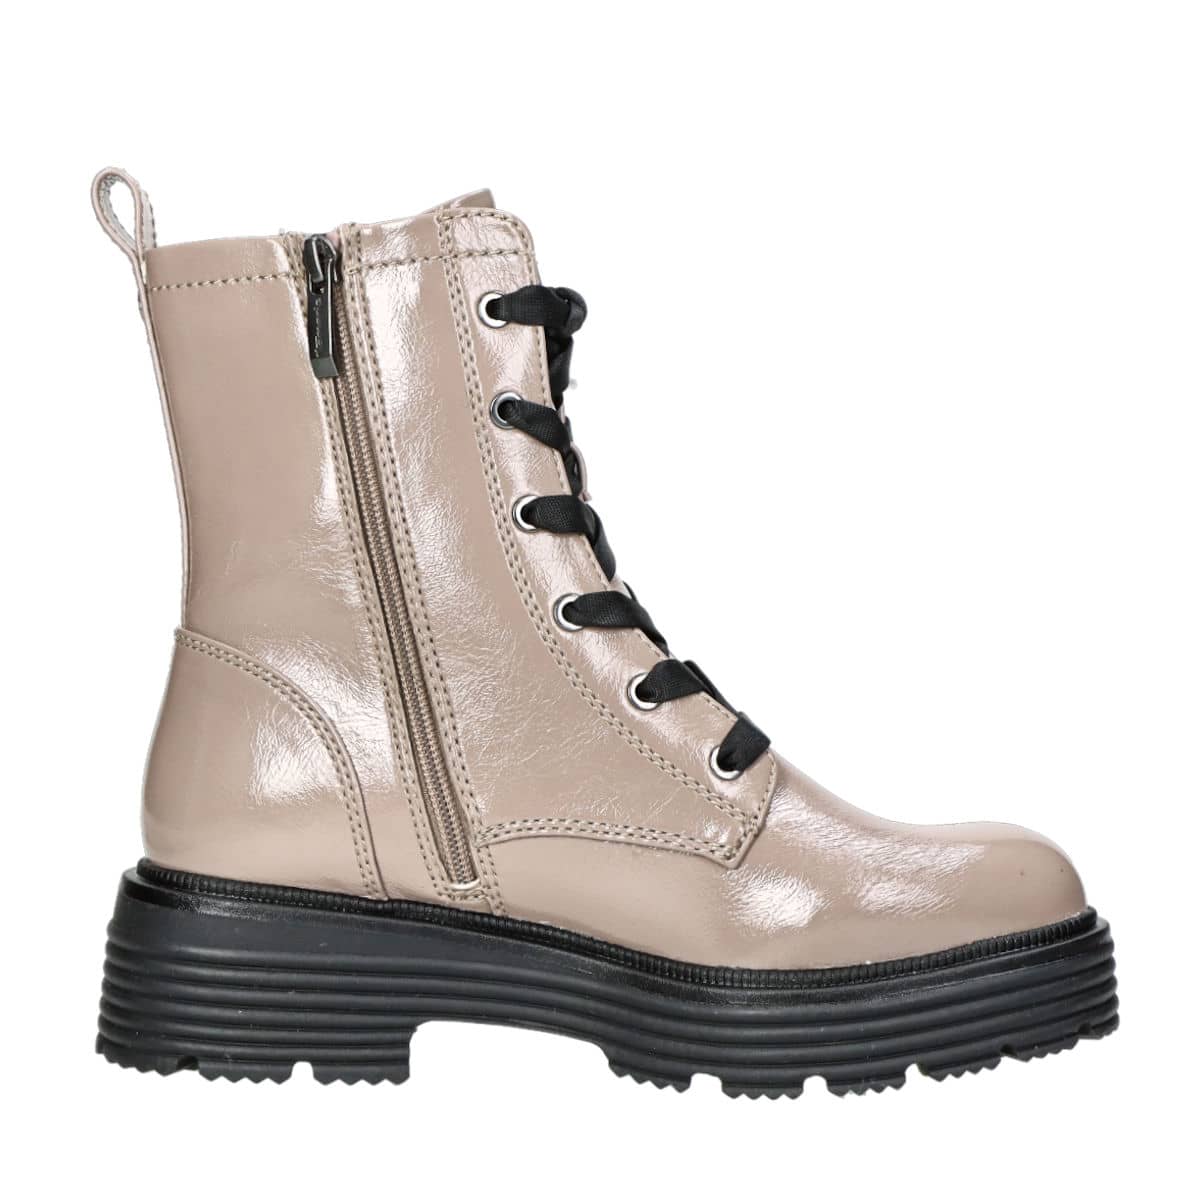 Watt speler beheerder Tamaris women's fashionable zipped ankle boots - beige/brown | Robel.shoes